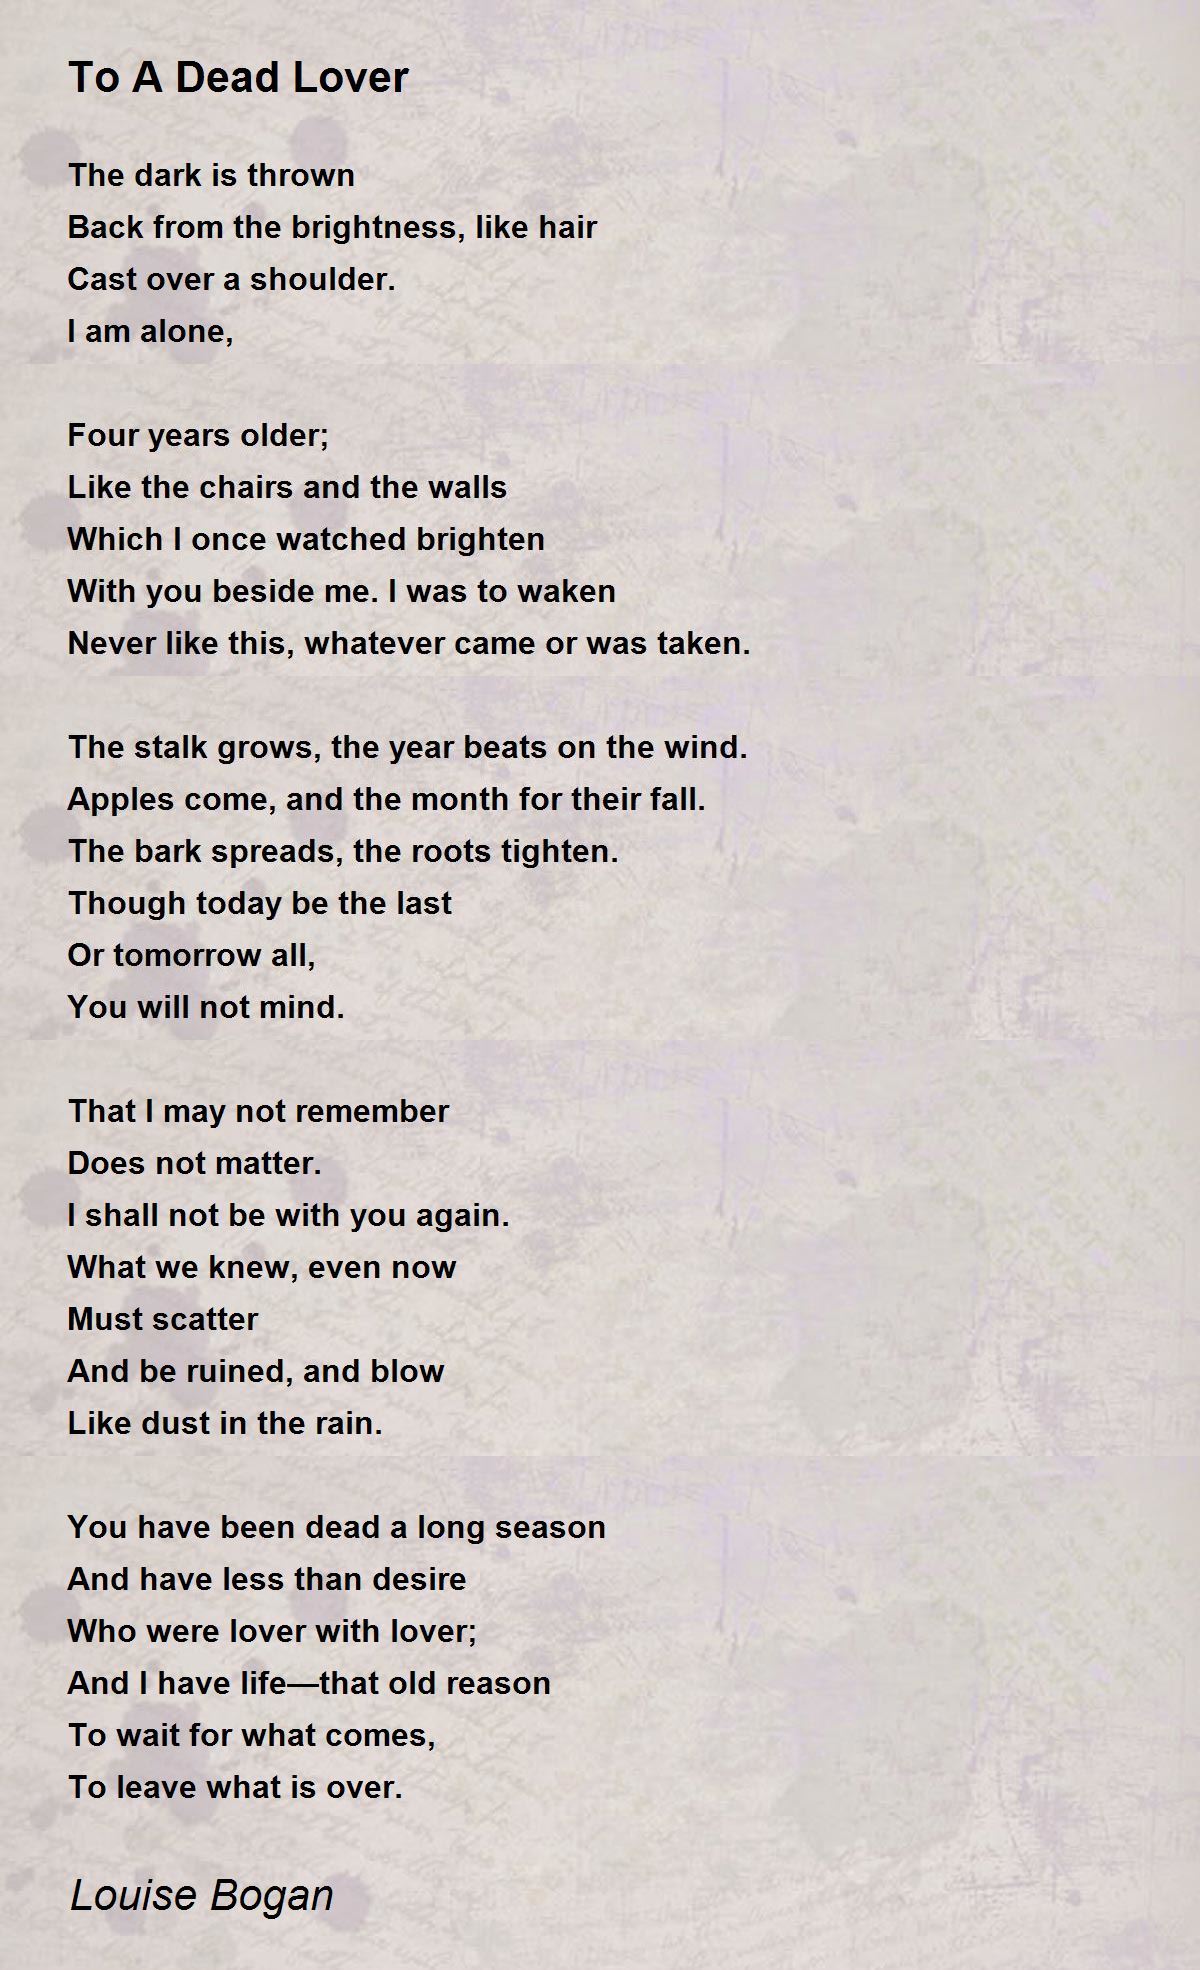 To A Dead Lover Poem by Louise Bogan - Poem Hunter